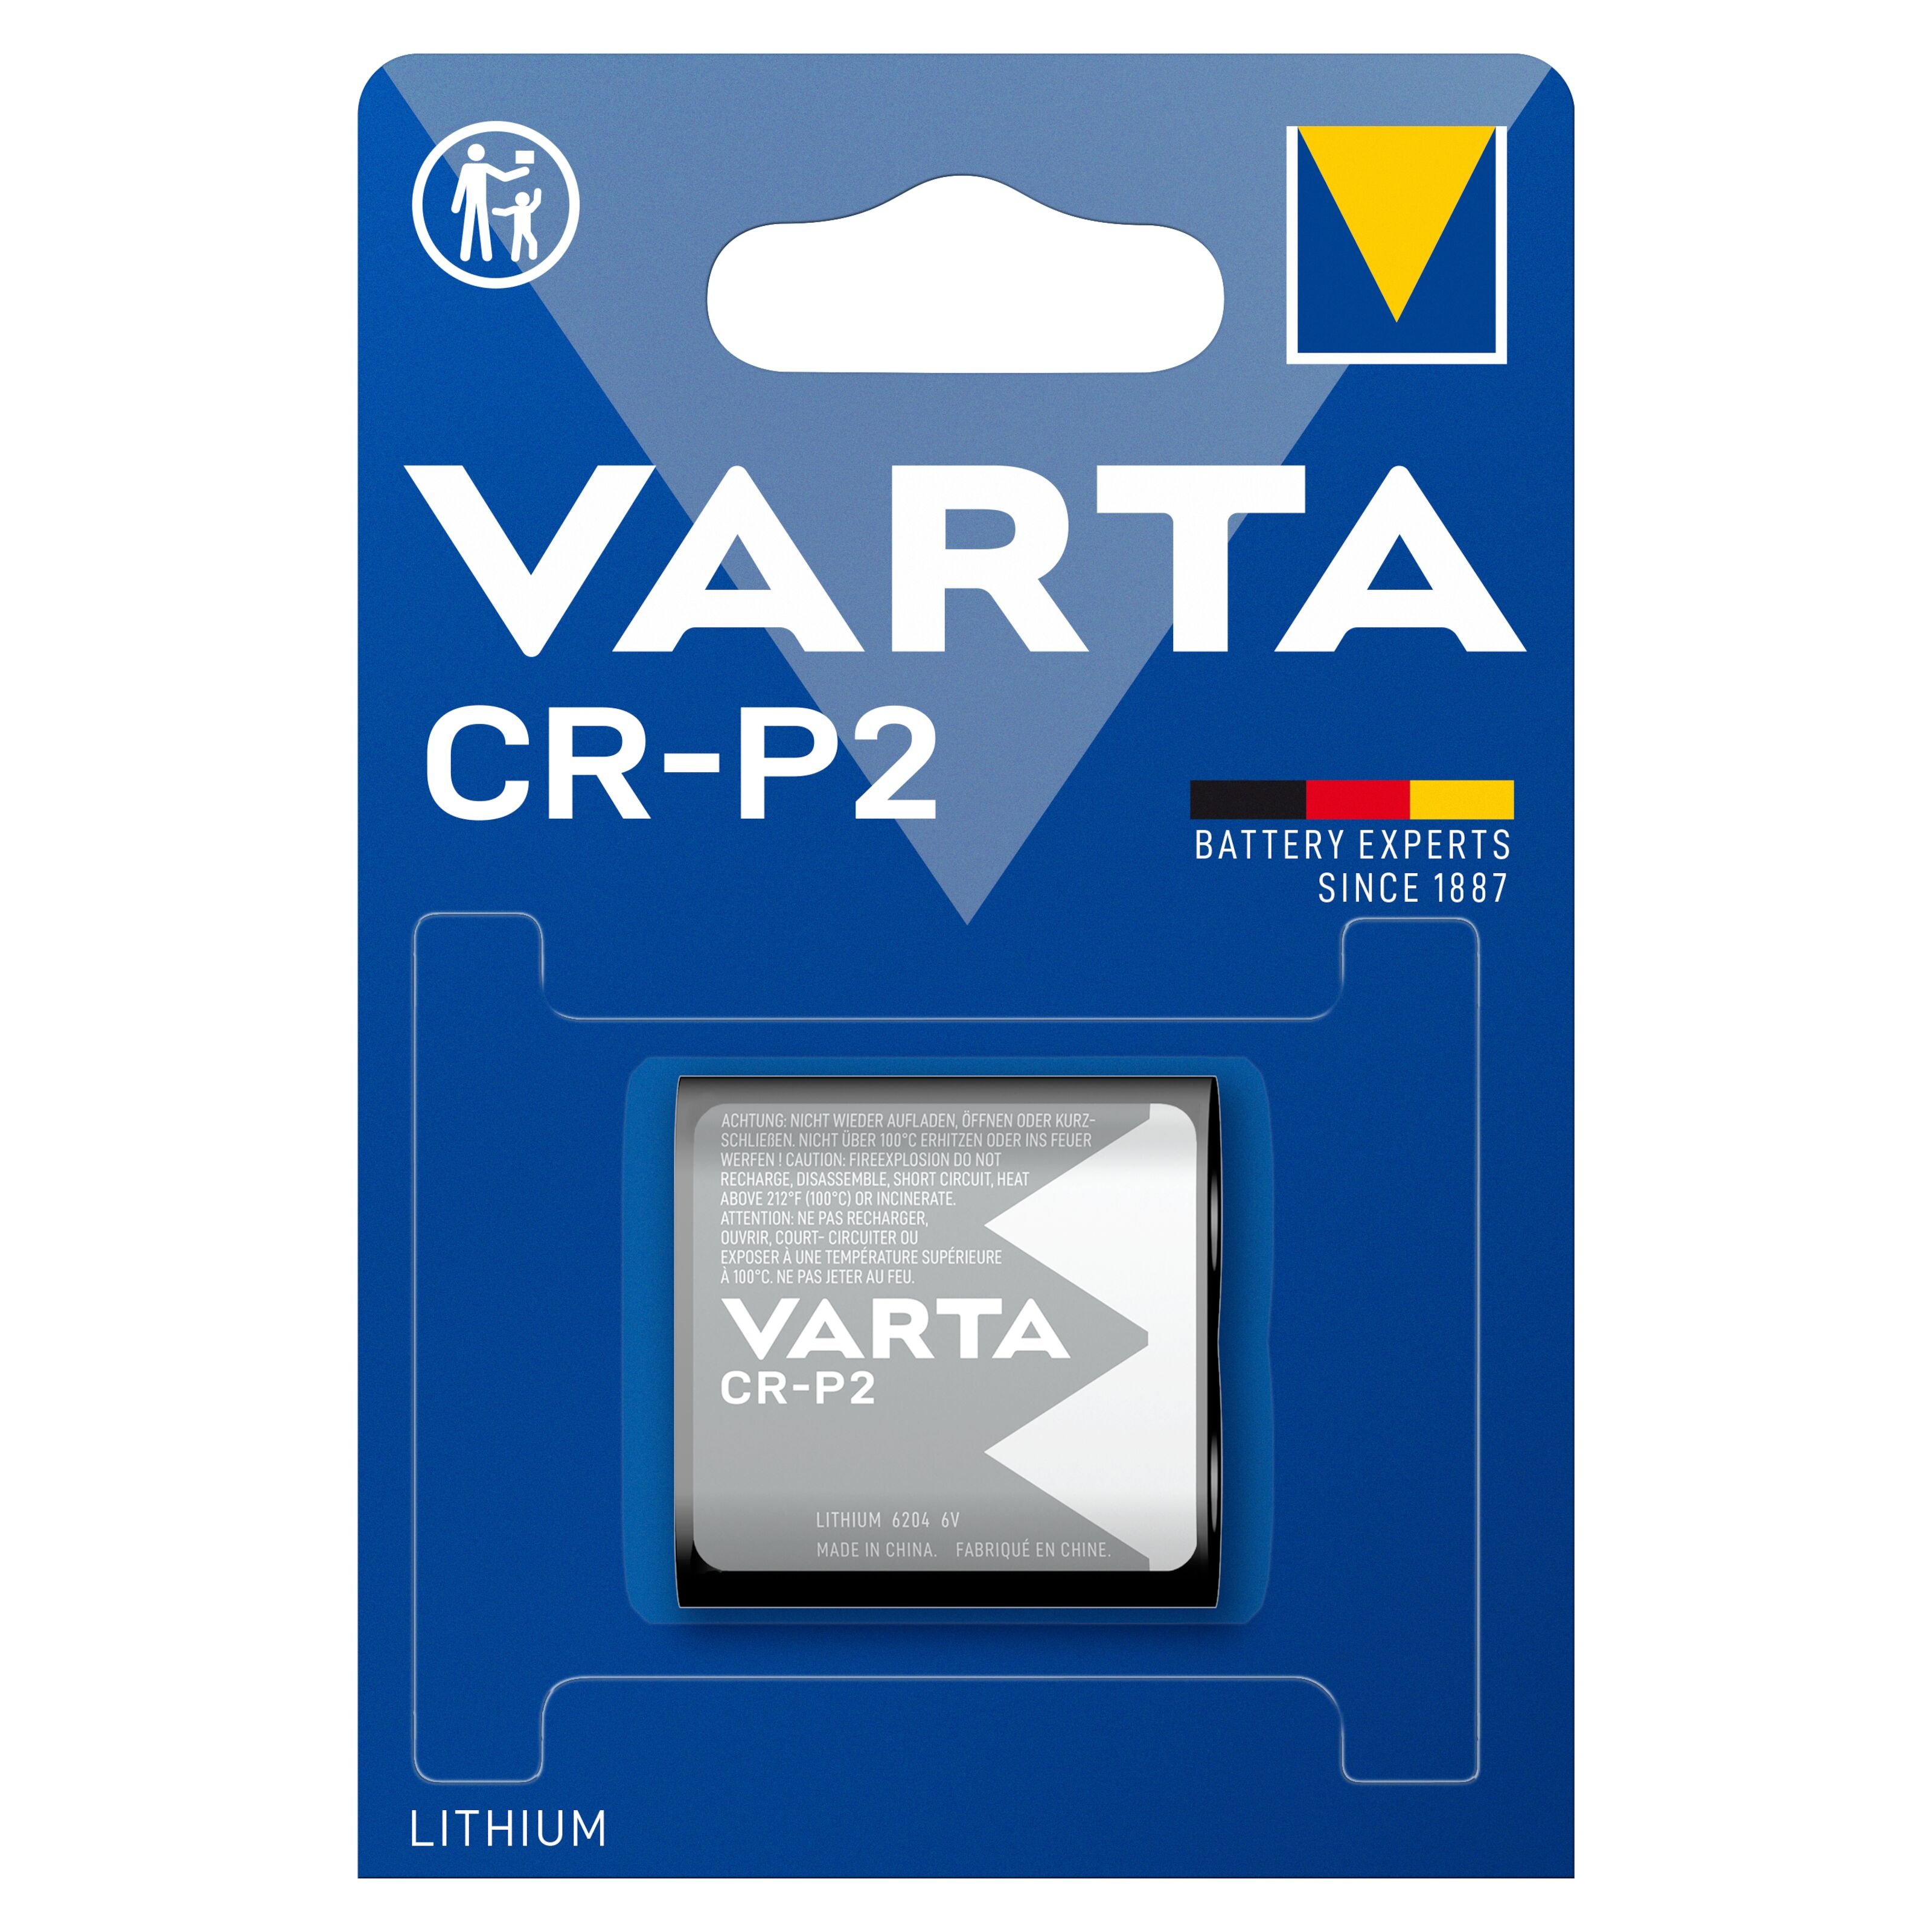 Varta Litiumbatteri 223/CR-P2 1-pack